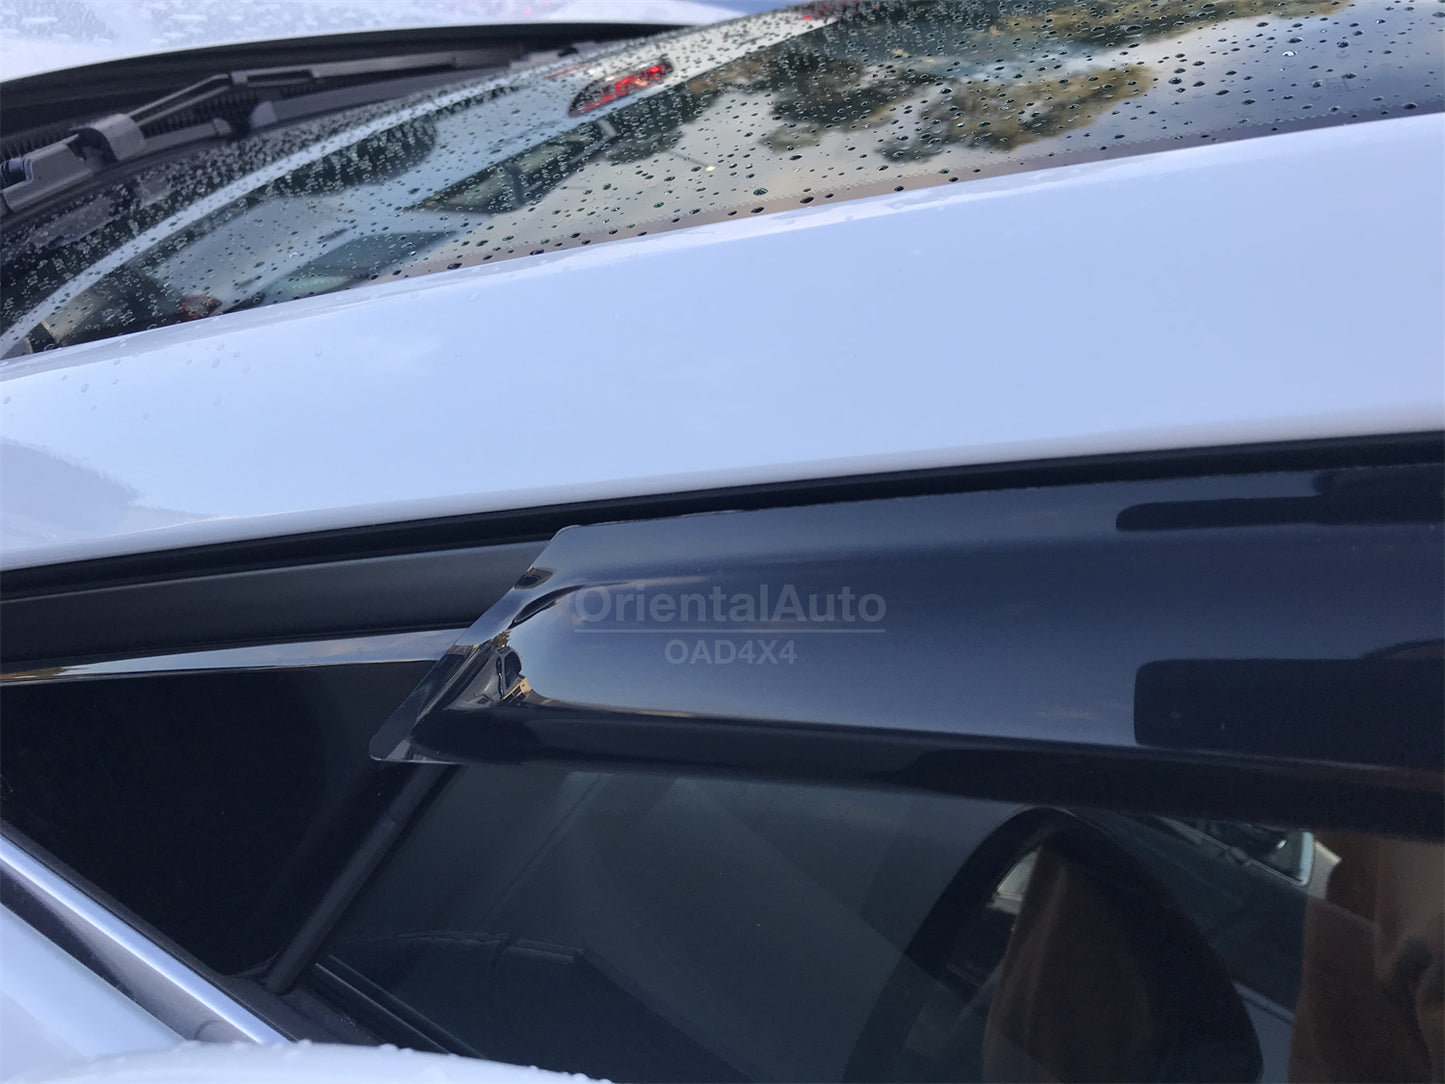 Pre-order Luxury Weathershields Weather Shields Window Visor For Mazda 3 BP Hatch 2019-Onwards